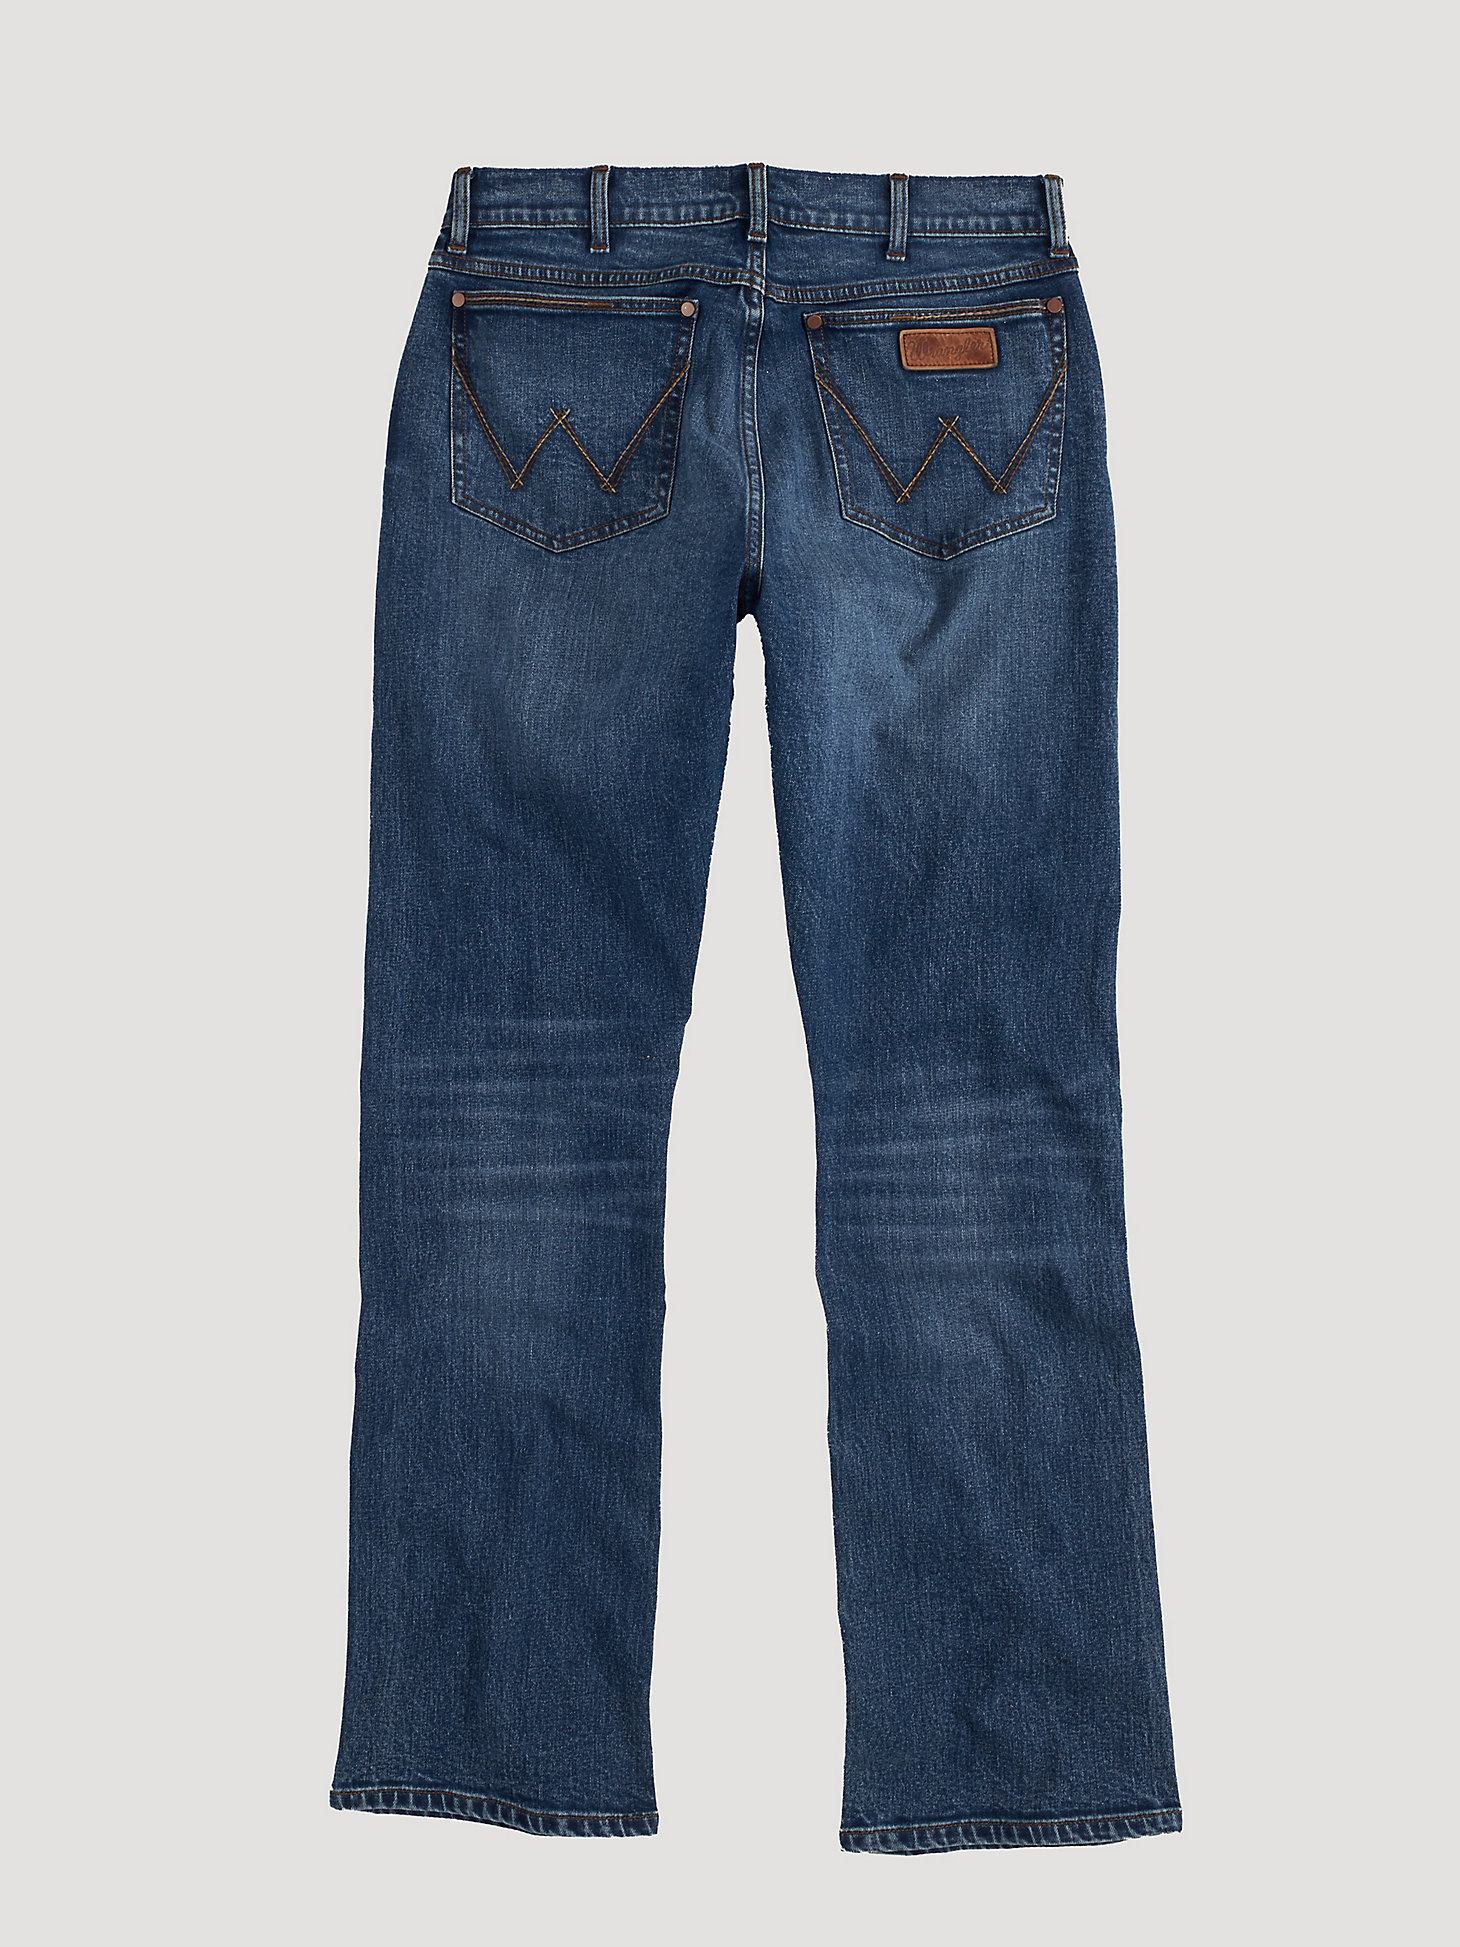 Wrangler Texas Stretch Jeans Mens Regular Light Powder Blue Vintage Faded Denim 